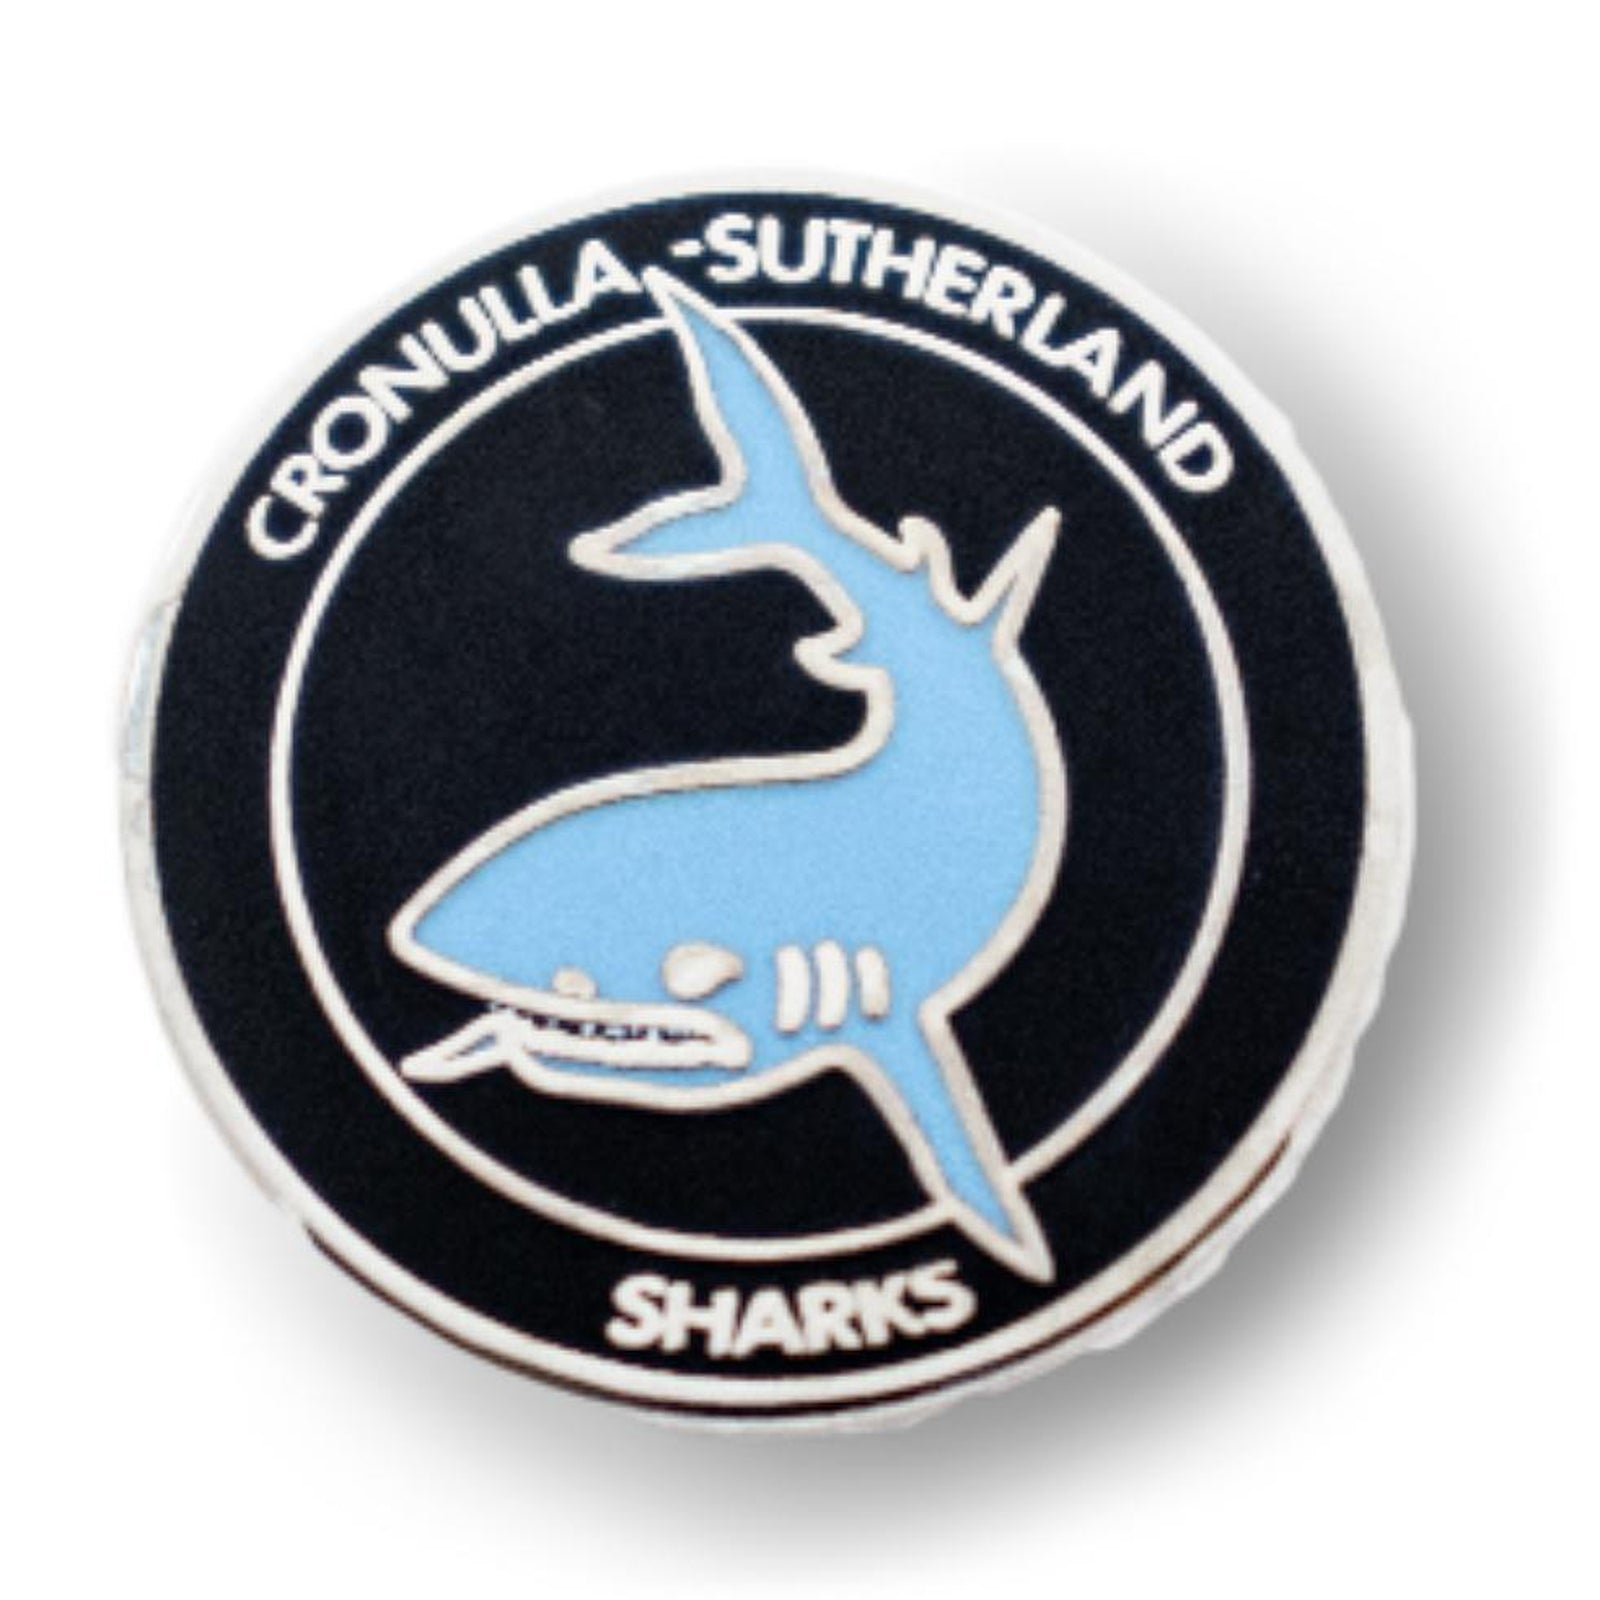 Cronulla Sharks NRL Heritage Team Metal Logo Pin Badge Mick Simmons Sport